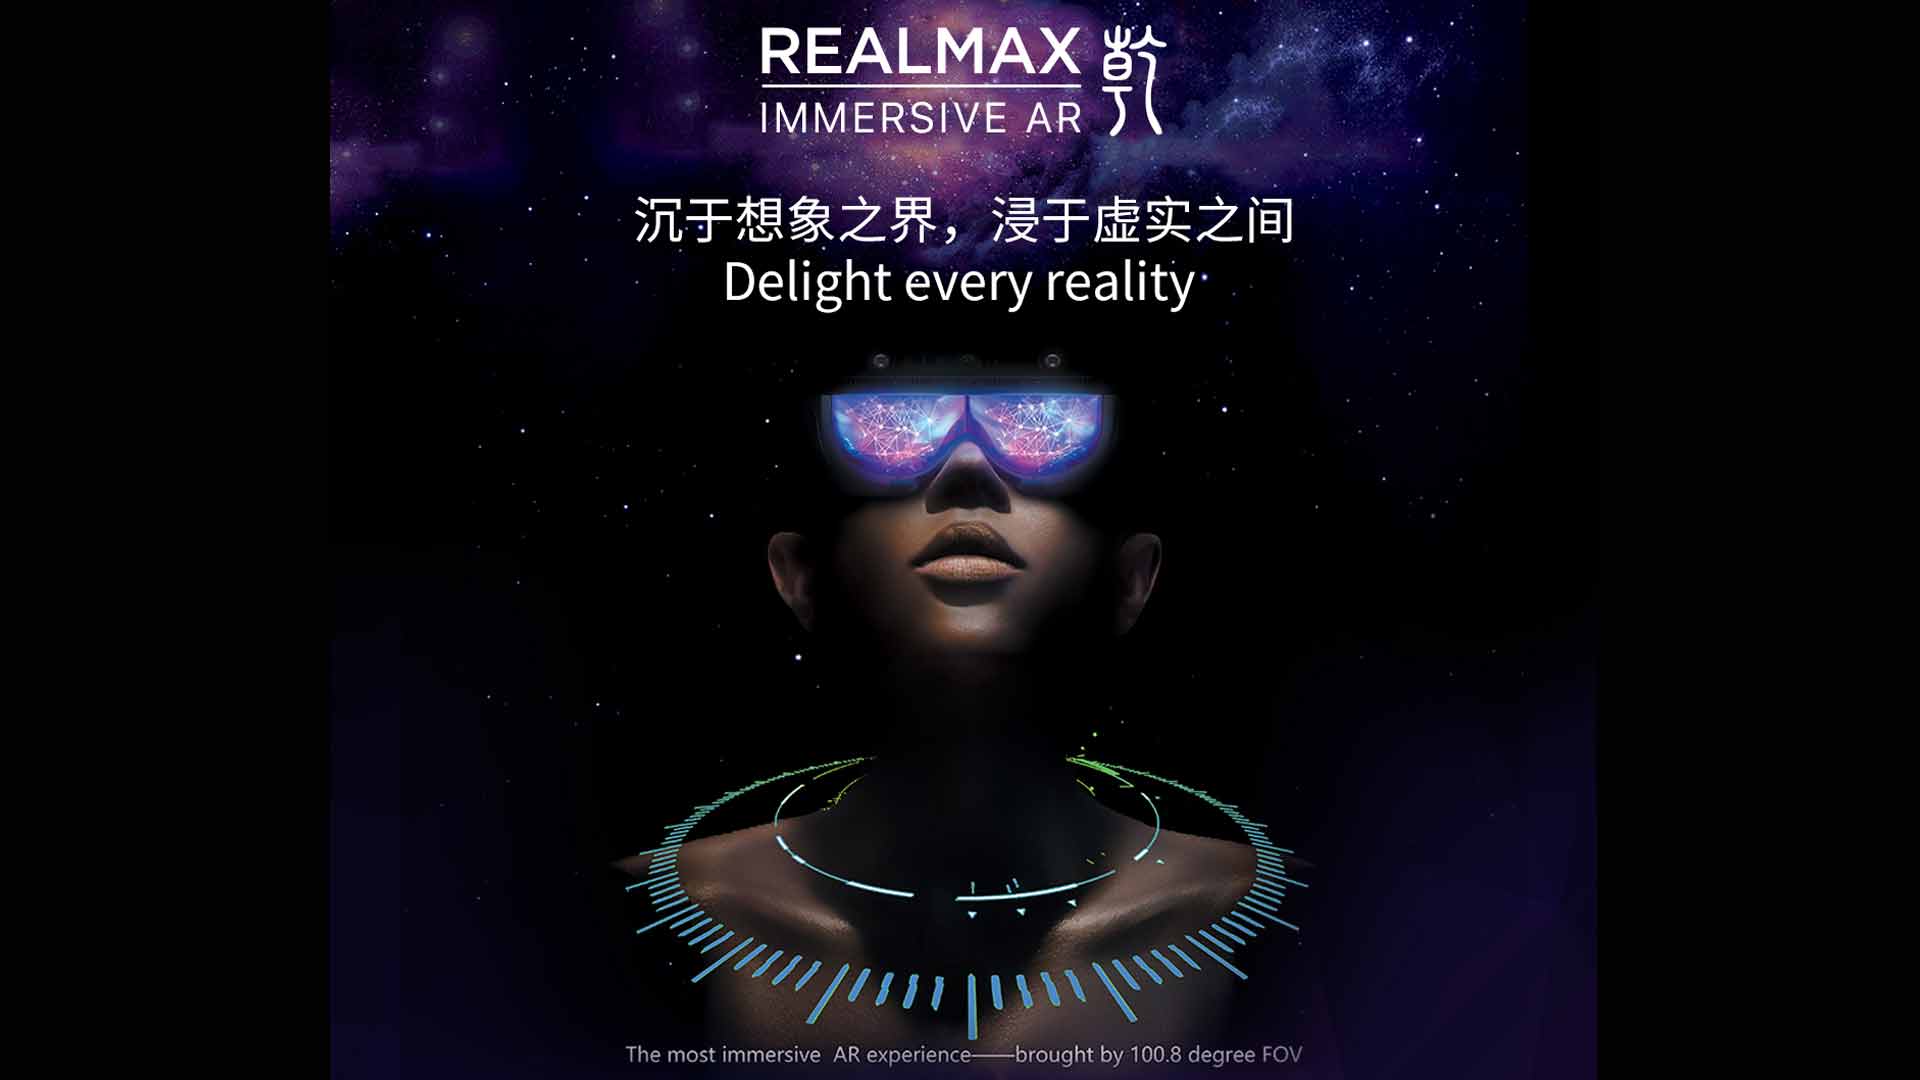 Realmax 100 ces 2019